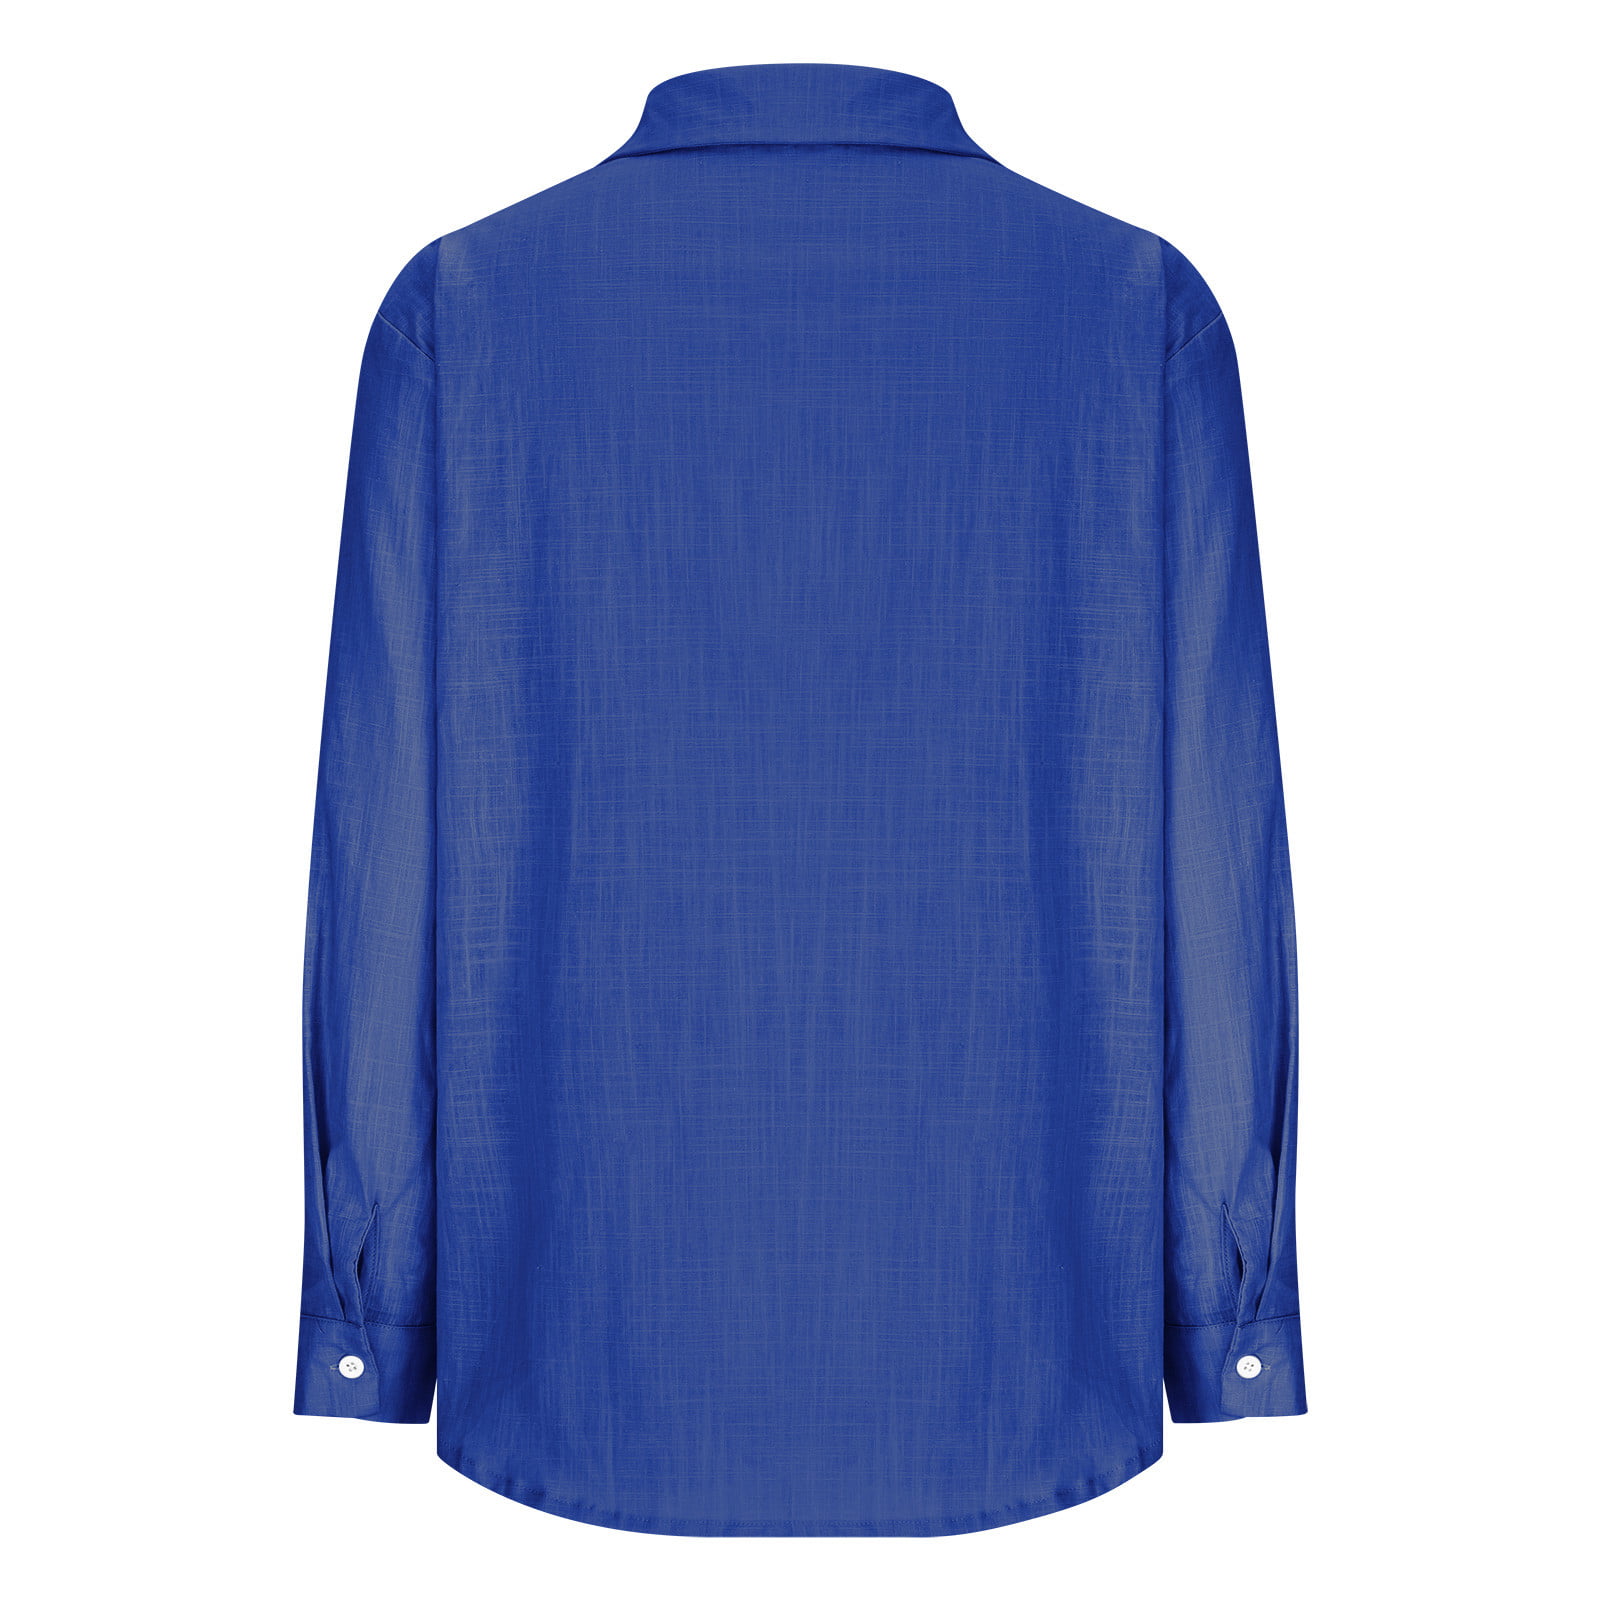 XFLWAM Womens Cotton Linen Button Down Shirt Casual Long Sleeve